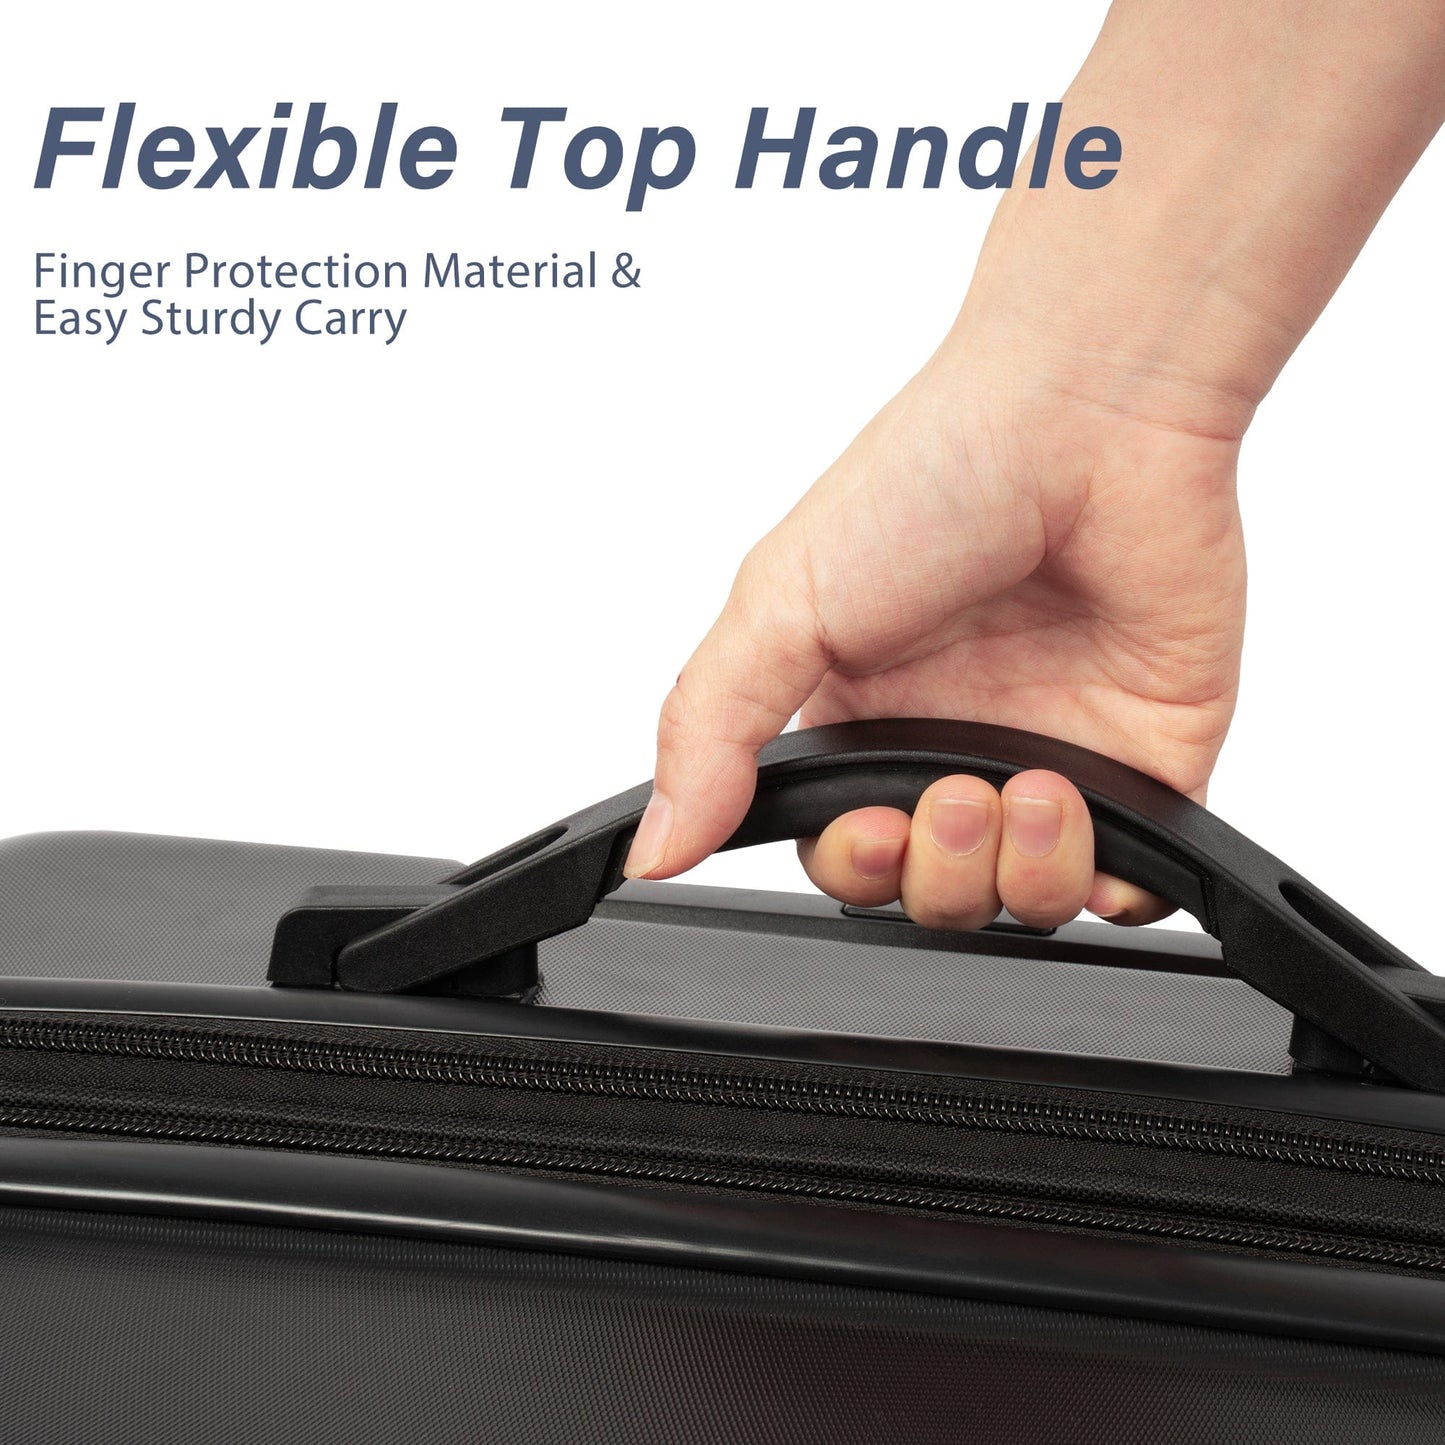 Spinner Hardshell Luggage Sets 3 Pcs with TSA Lock Lightweight